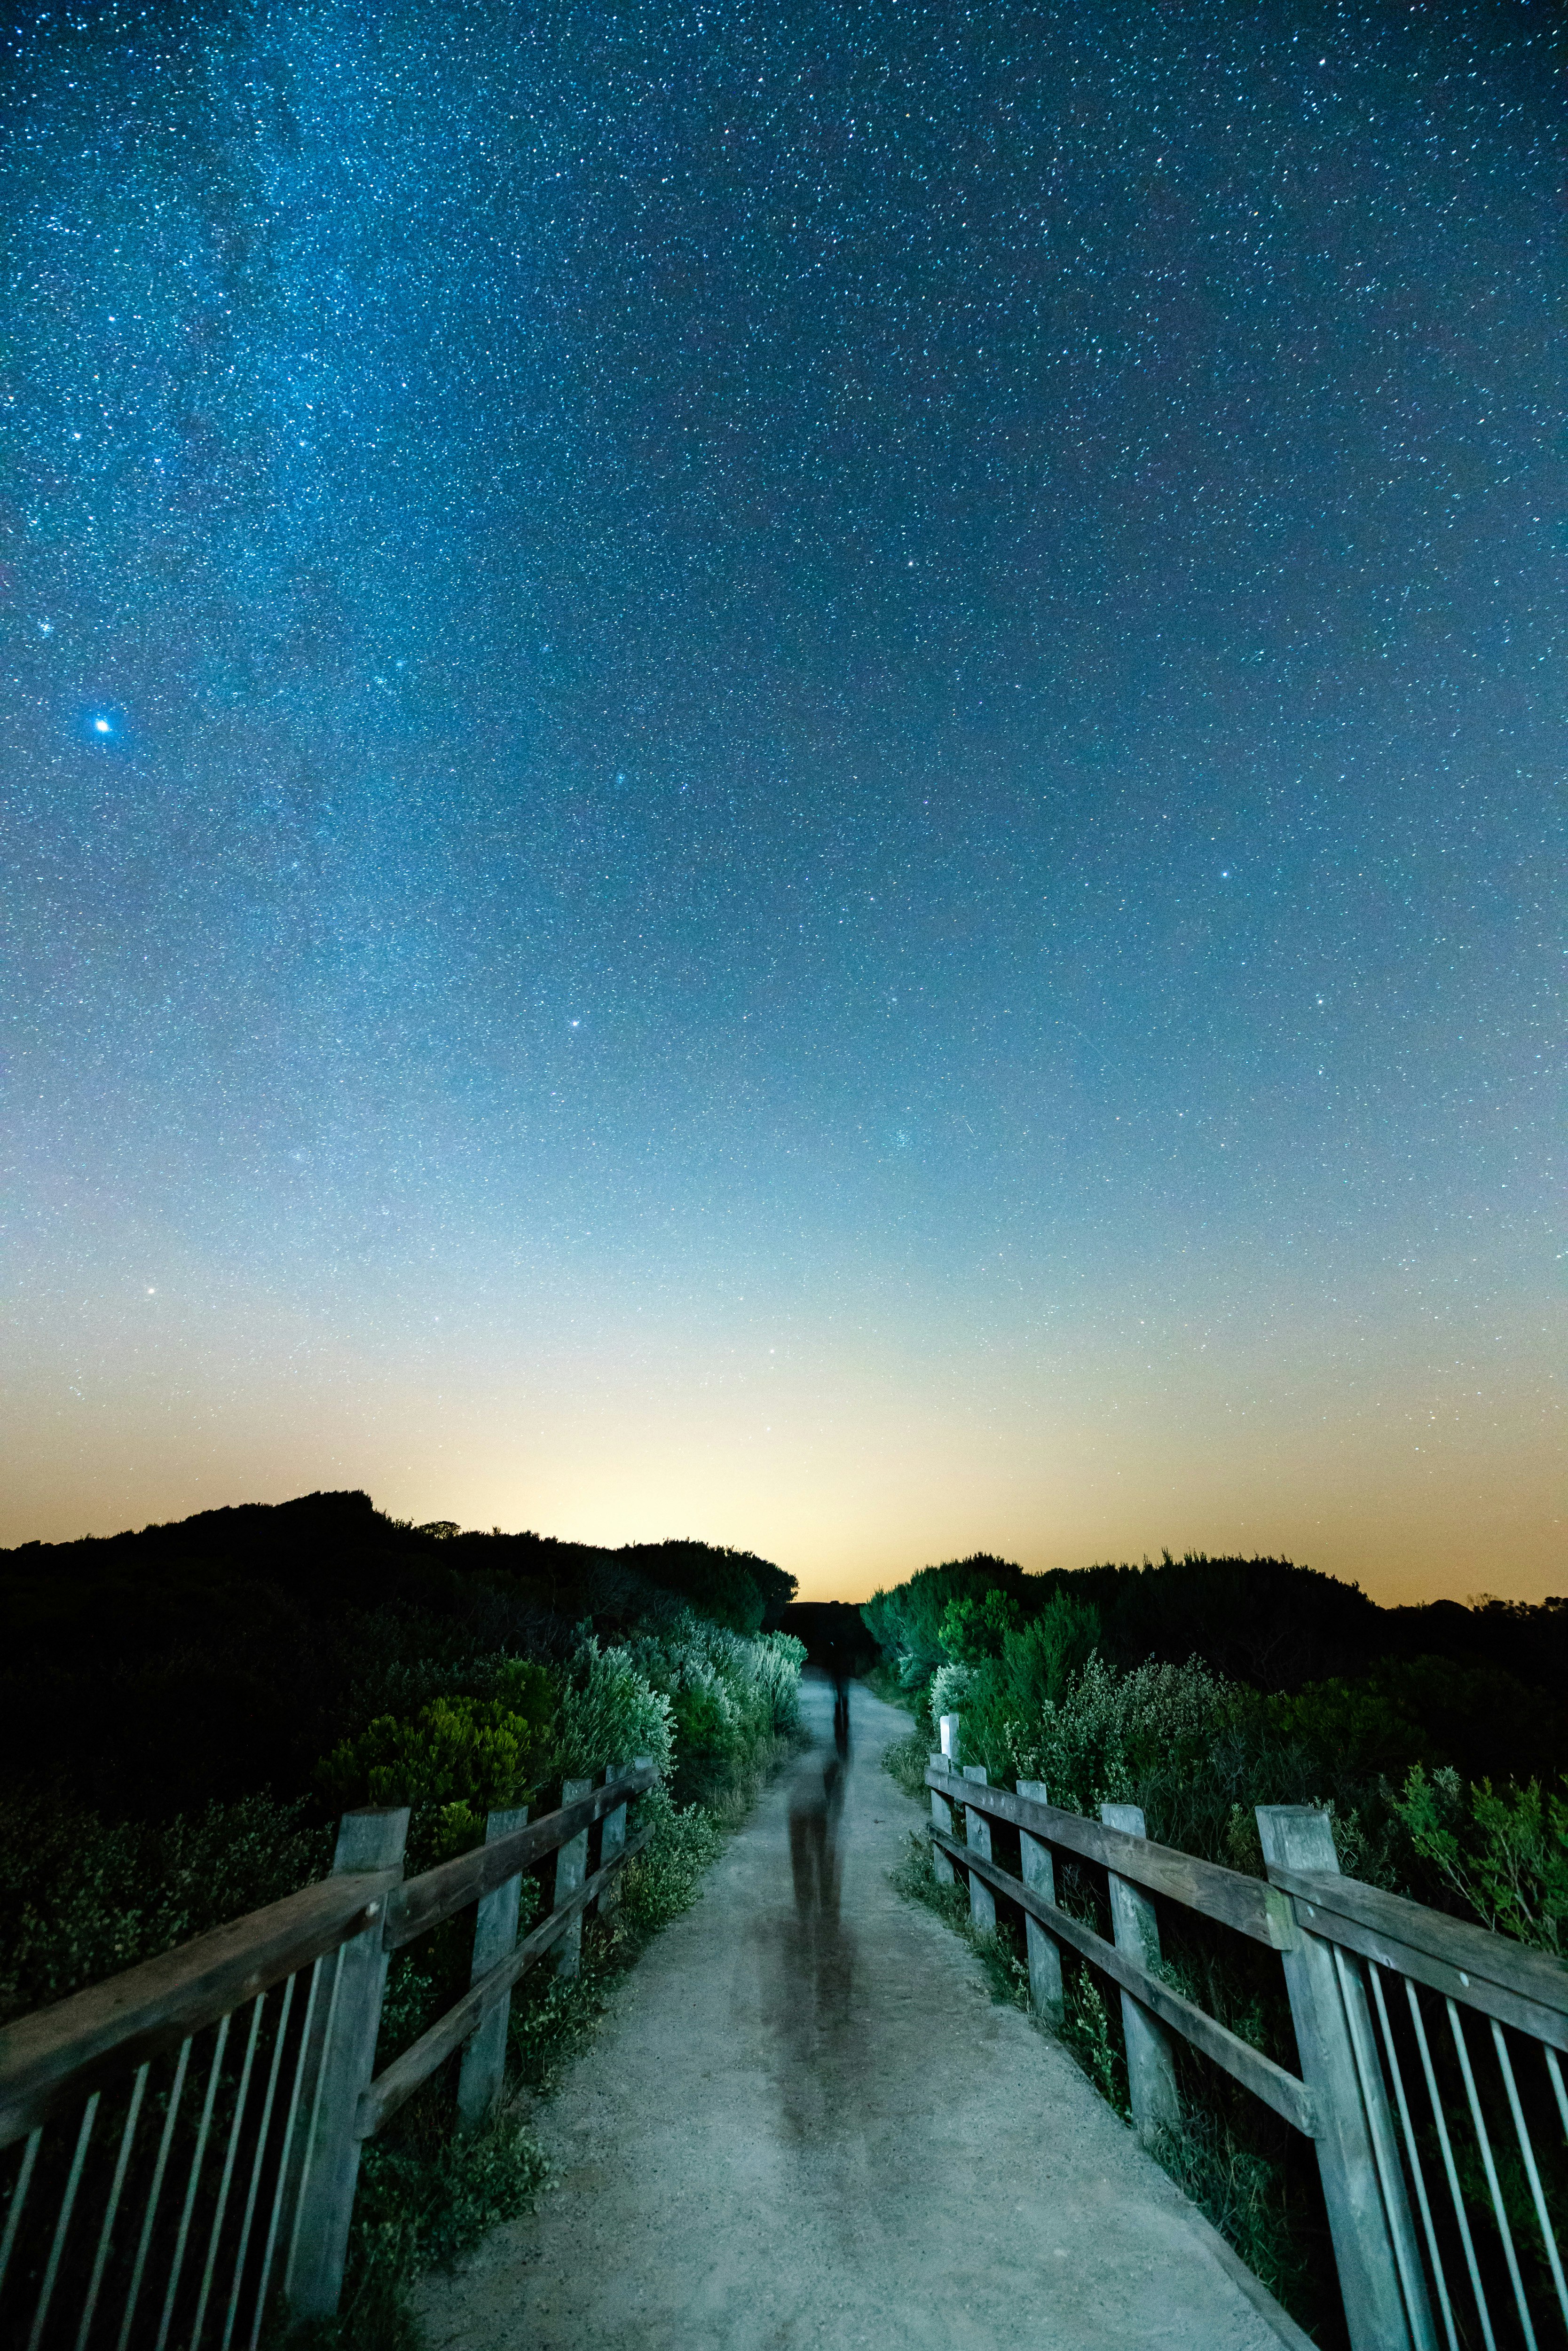 gray wooden bridge under night sky